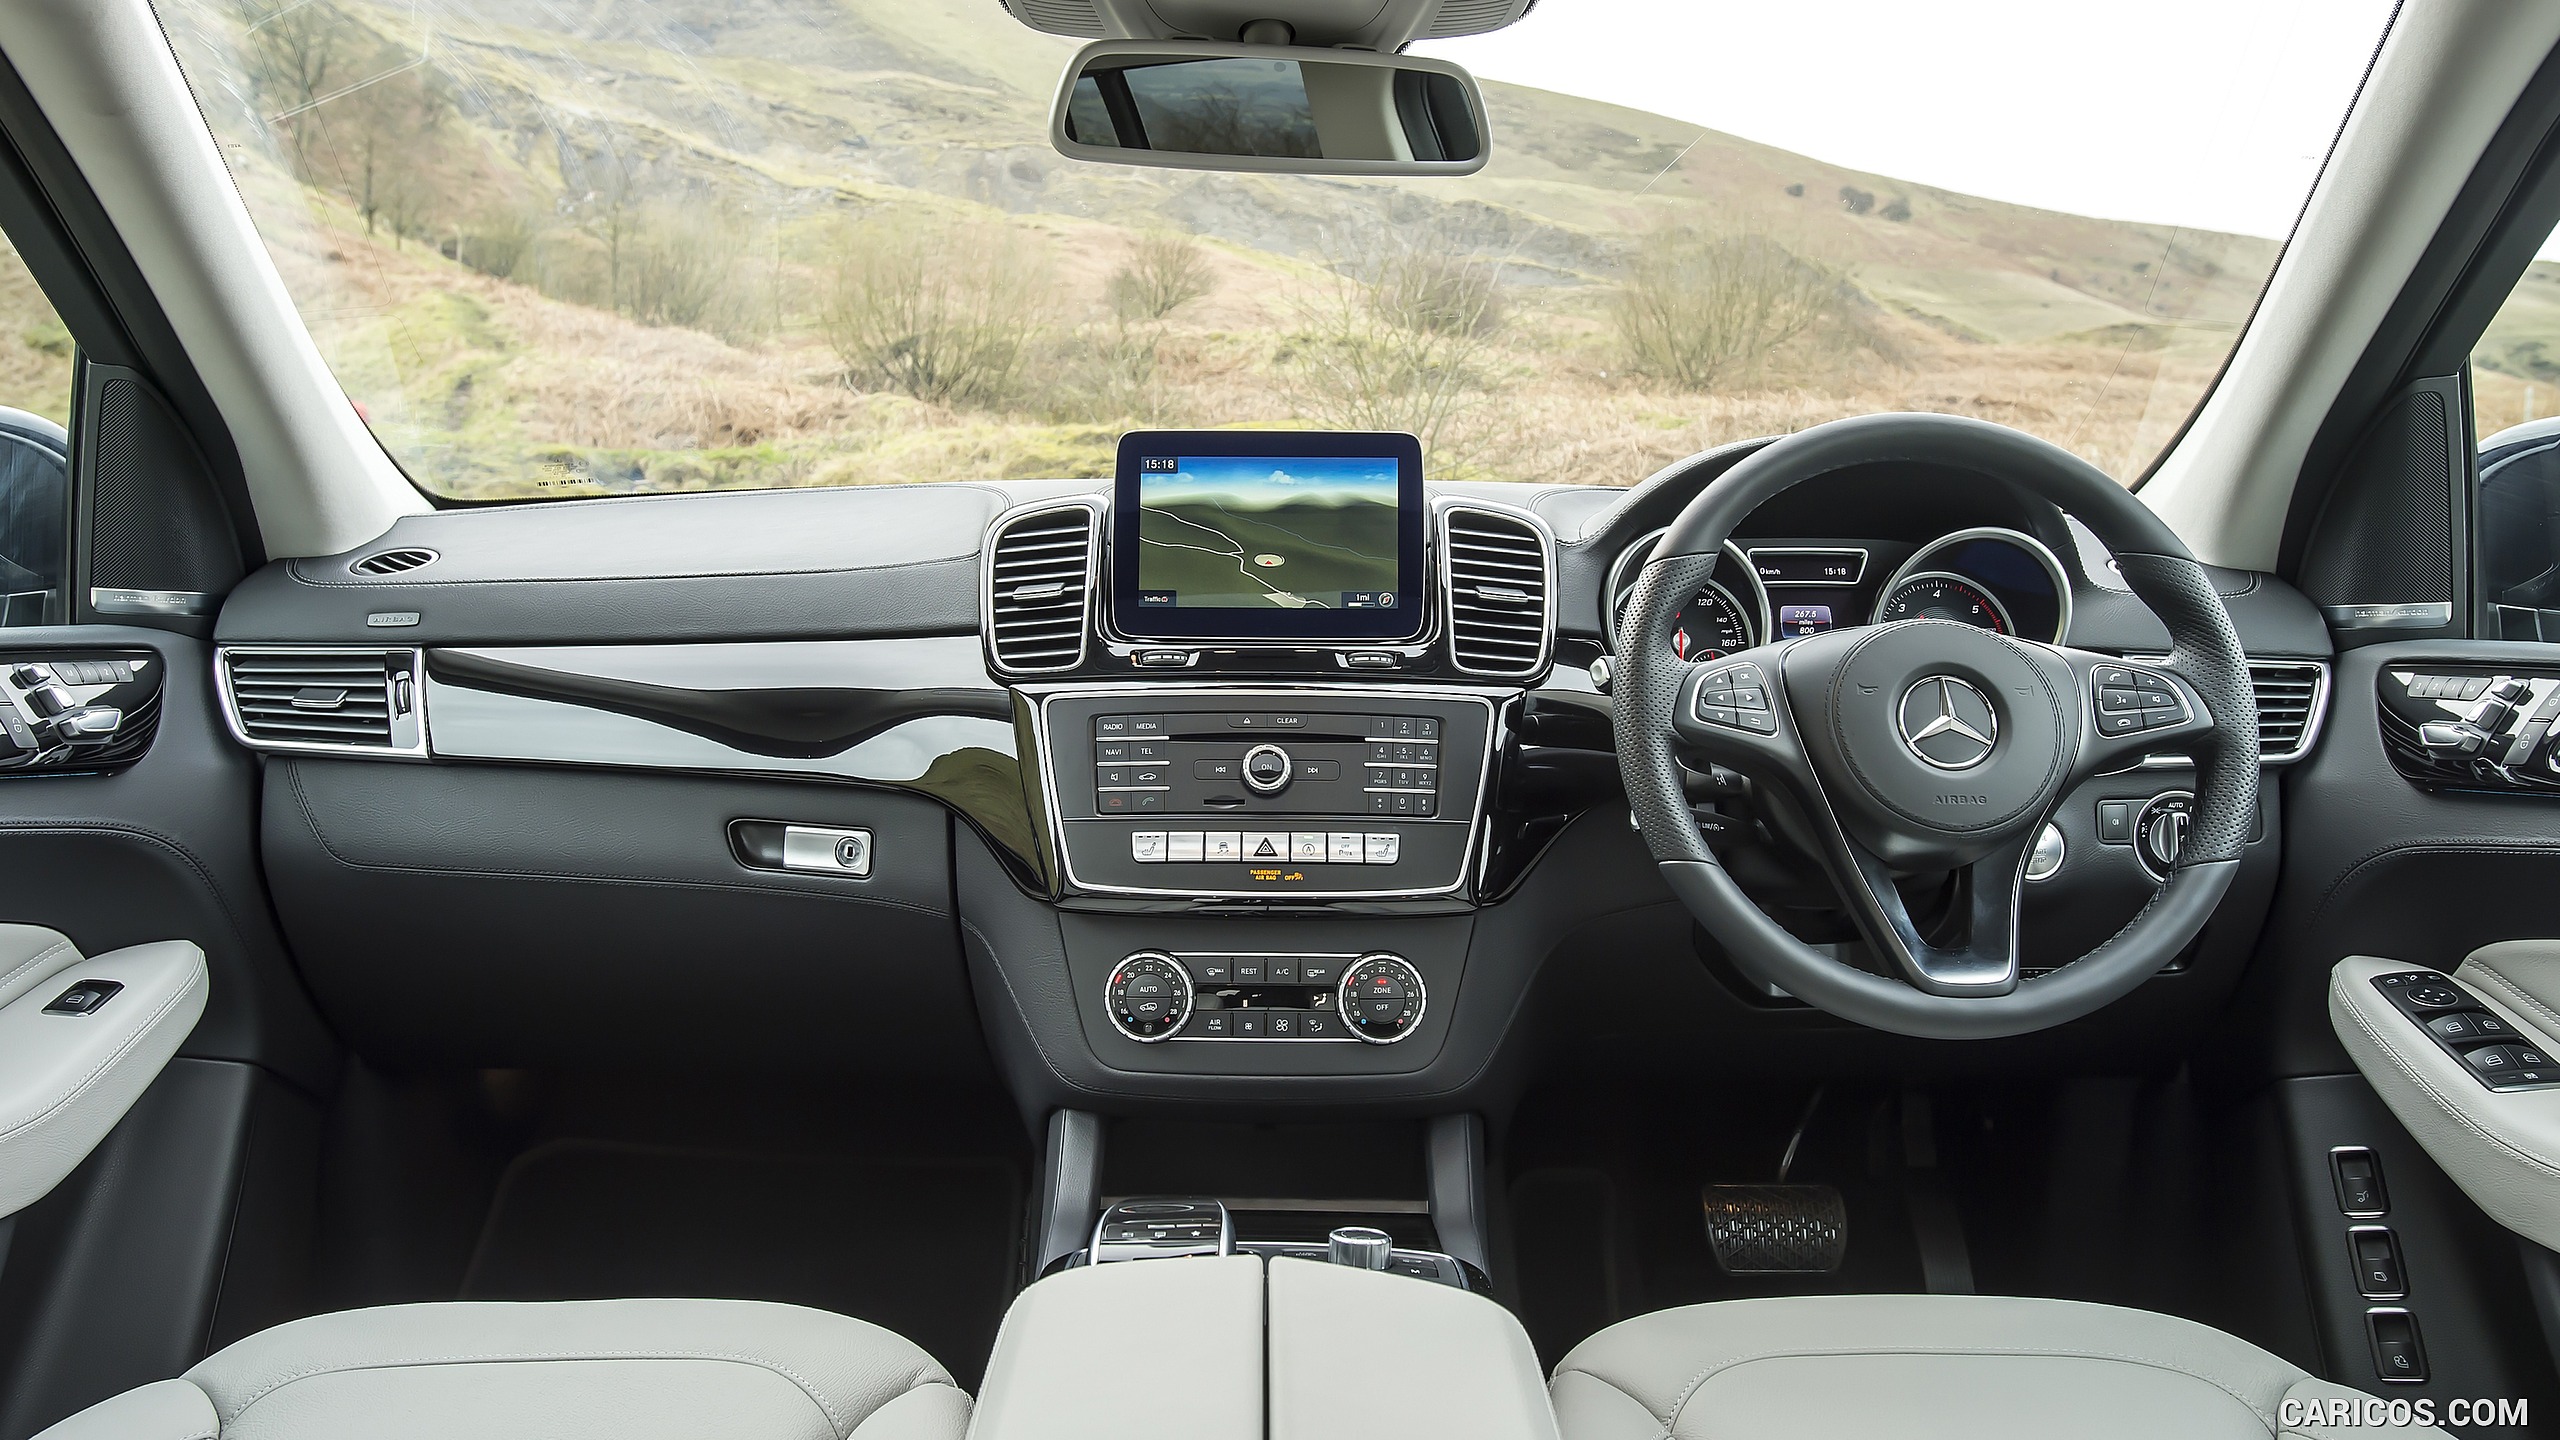 2017 Mercedes-Benz GLS 350 d 4MATIC AMG Line (UK-Spec, Diesel) - Interior, Cockpit, #247 of 255